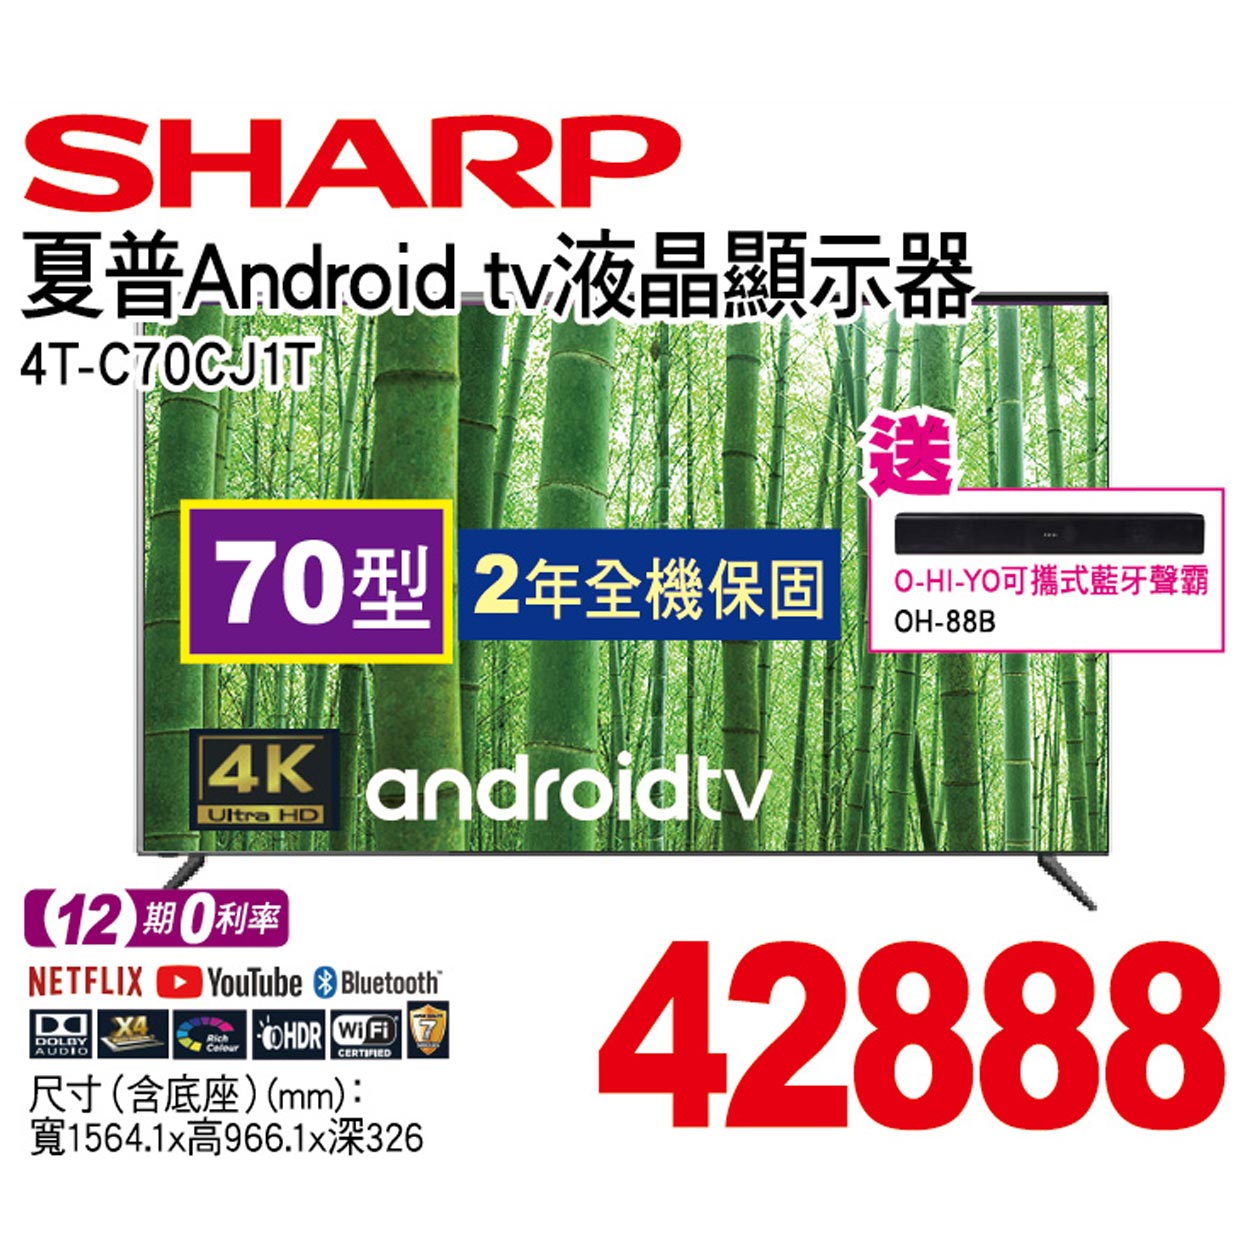 夏普Android tv液晶顯示器